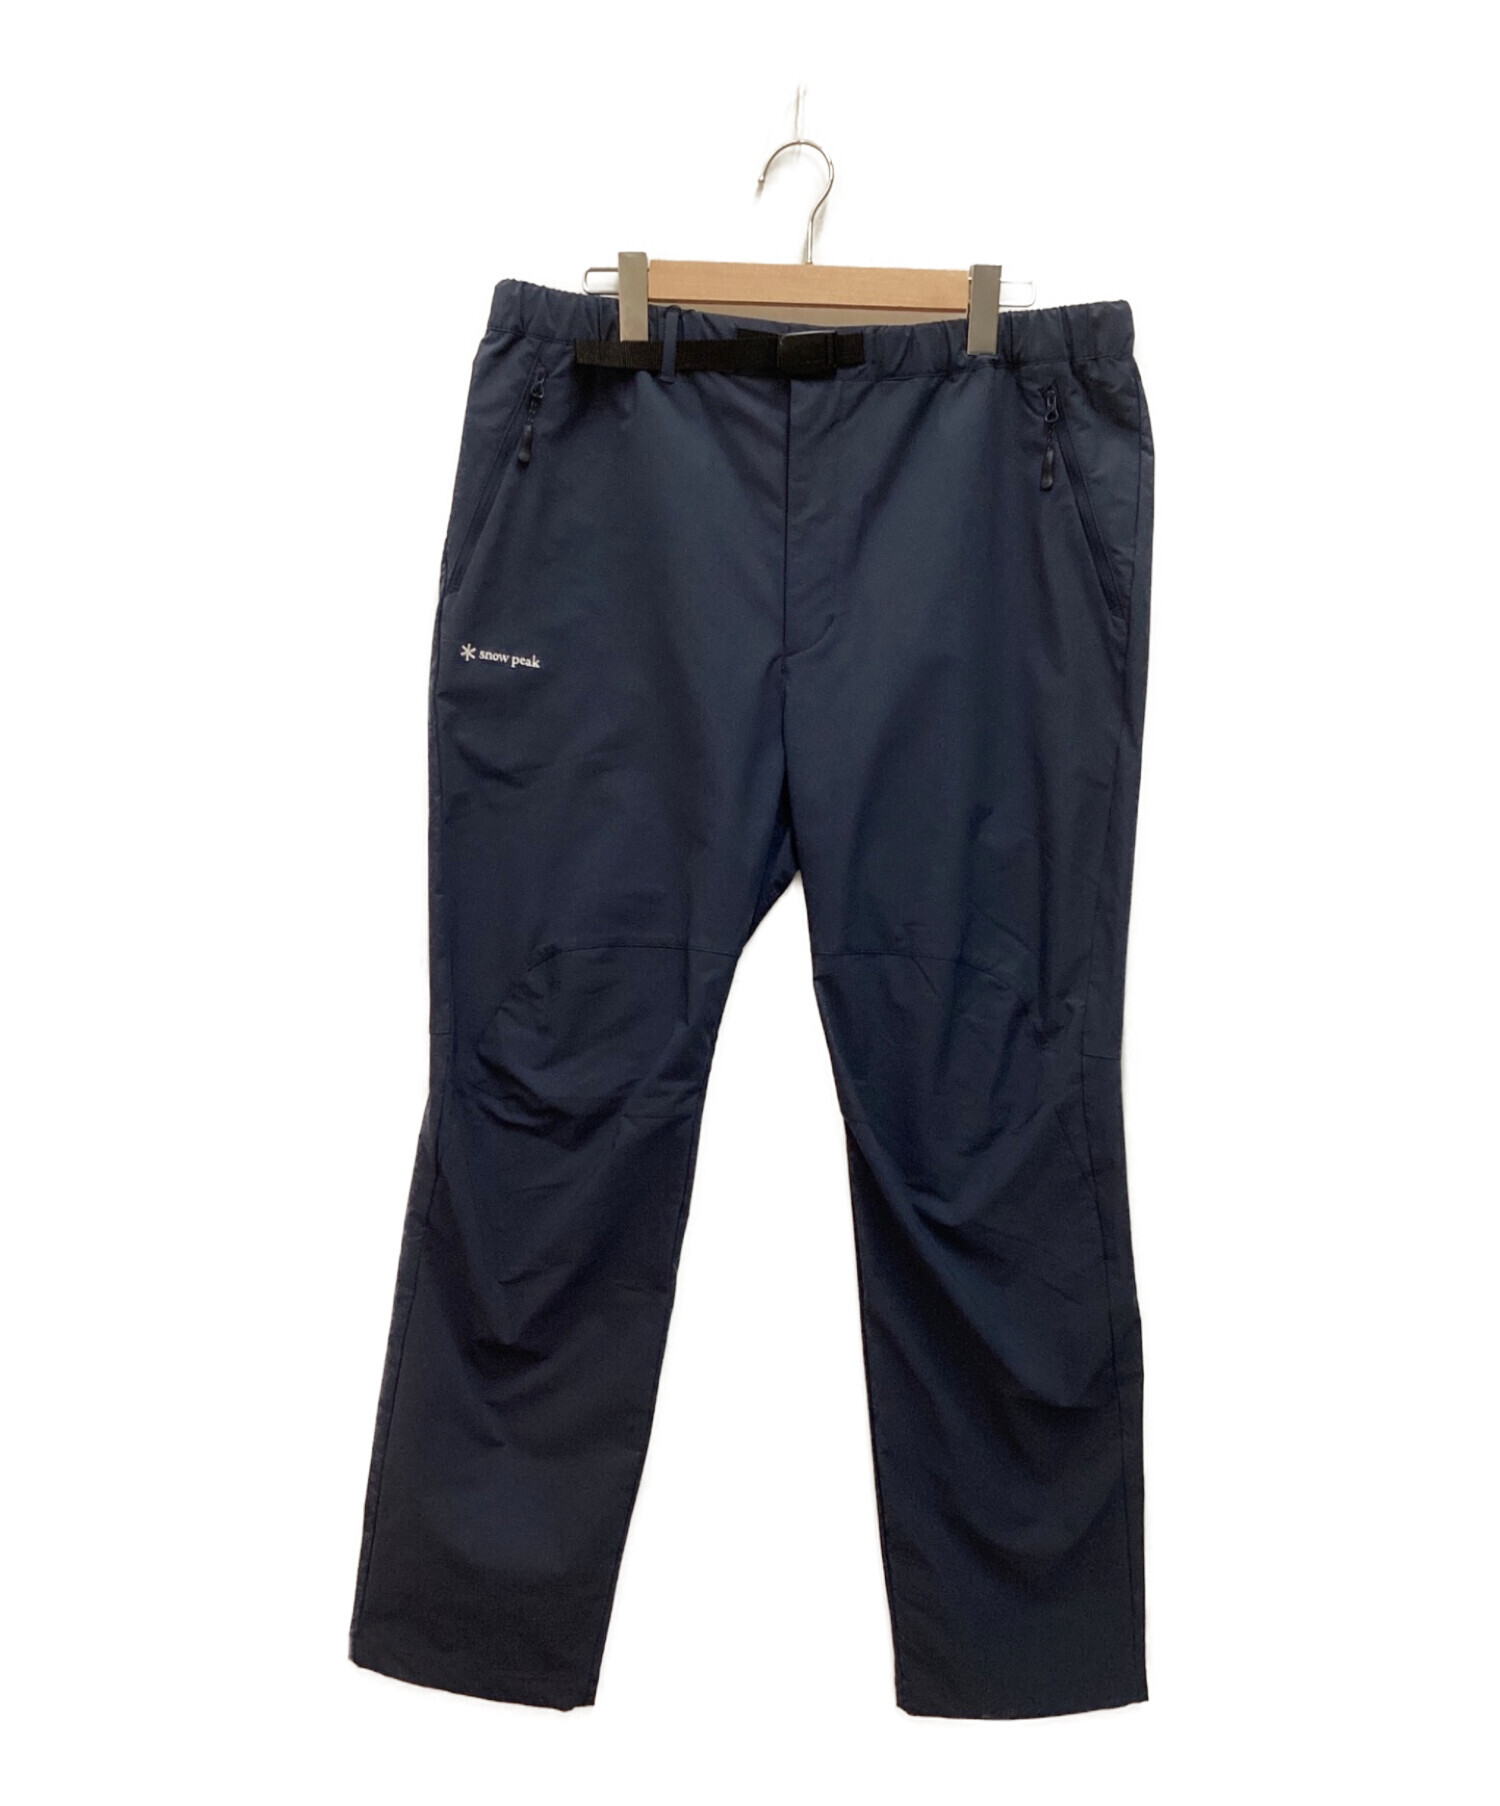 snow peak (スノーピーク) Strech Cloth Pants ネイビー サイズ:XL 未使用品